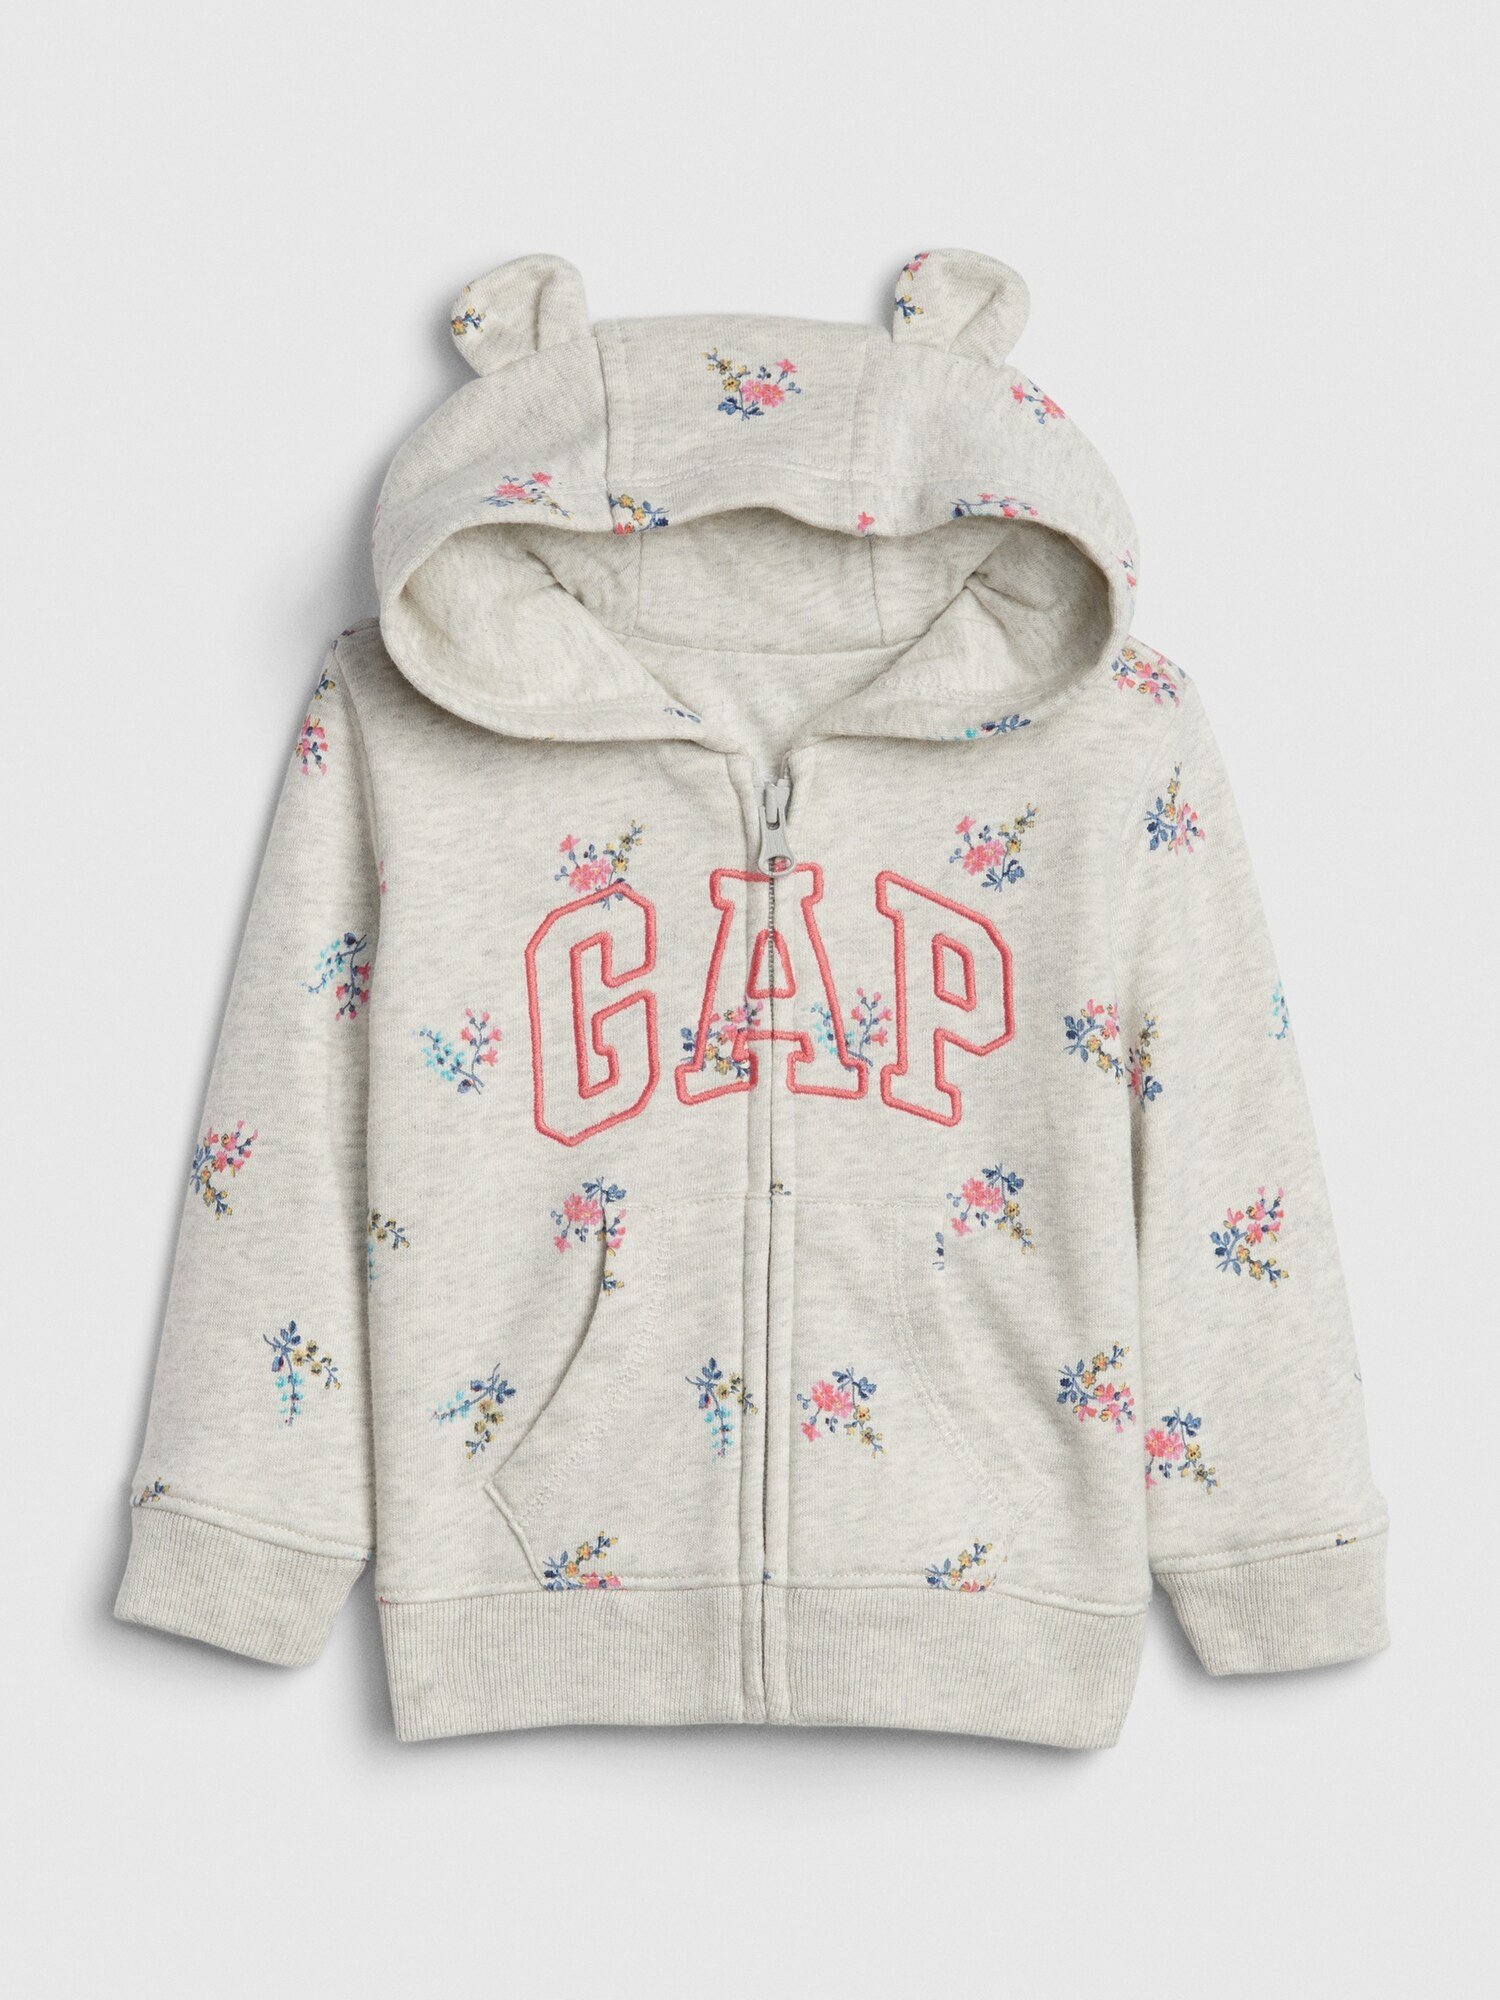 Gap Logo Brannan Bear Sweatshirt product image